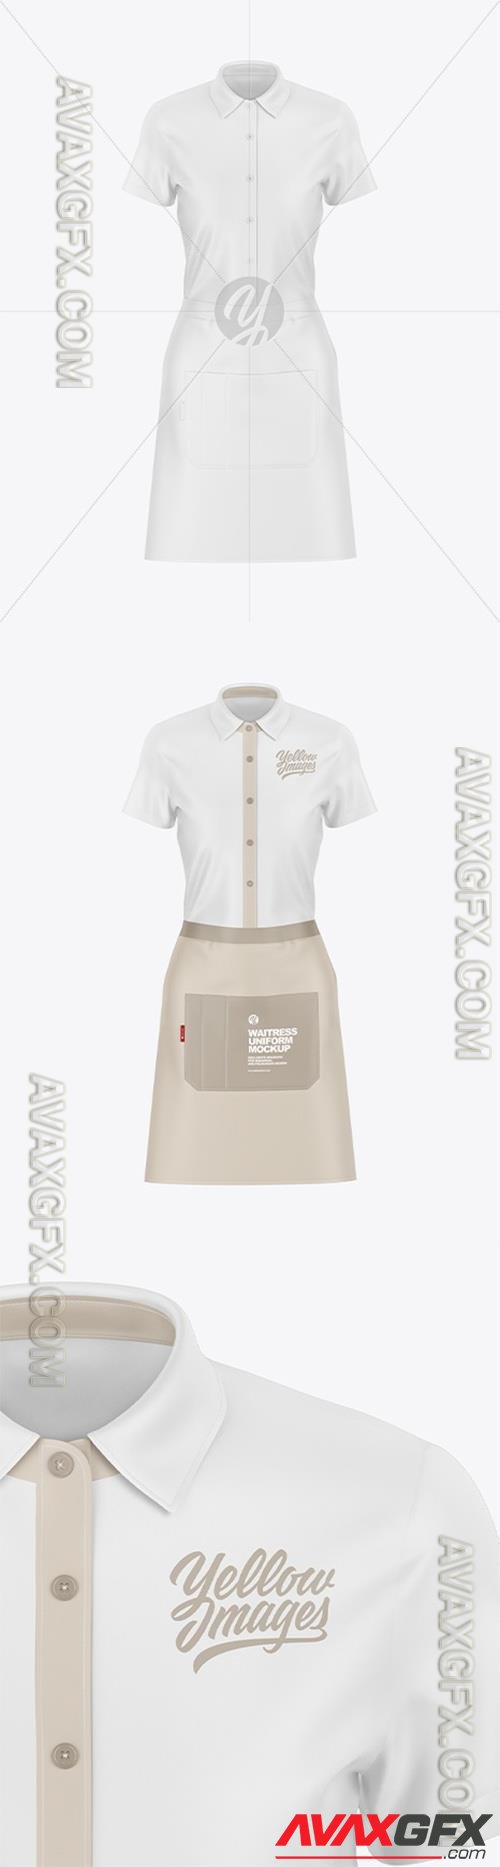 Waitress Short Sleeve Uniform Mockup 95931